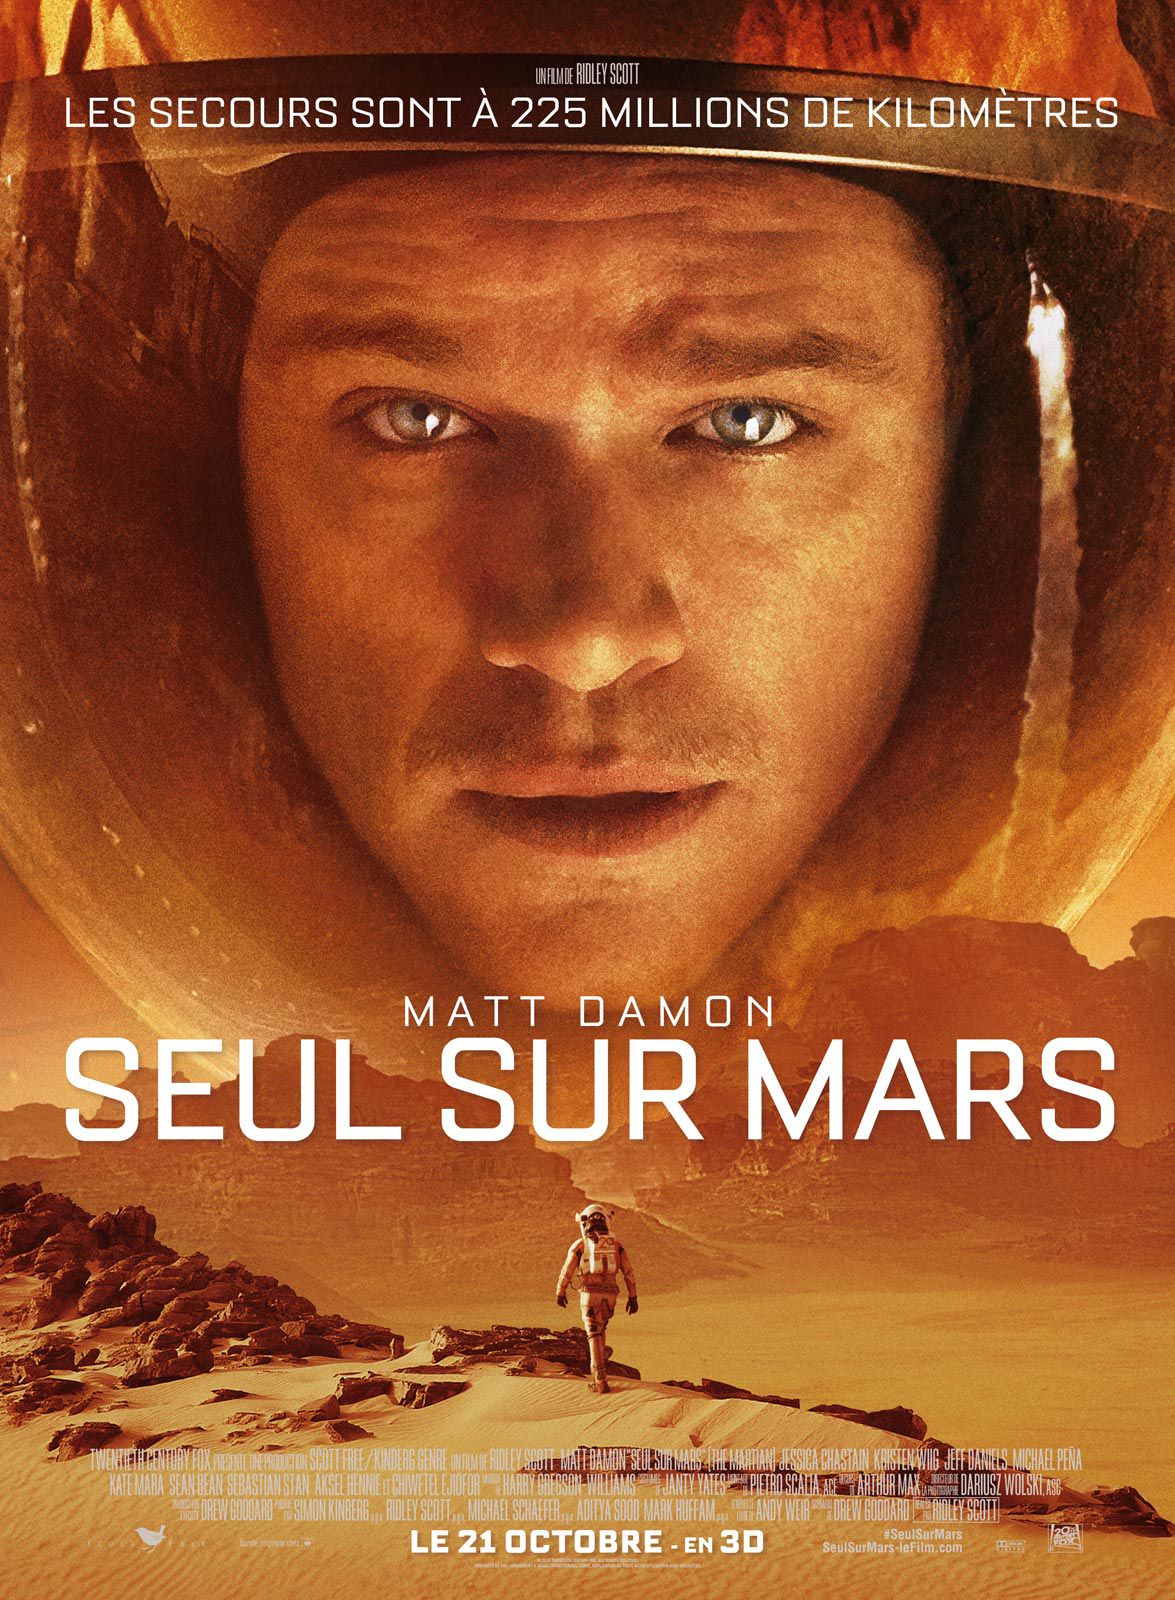 Seul sur Mars - Film (2015) streaming VF gratuit complet